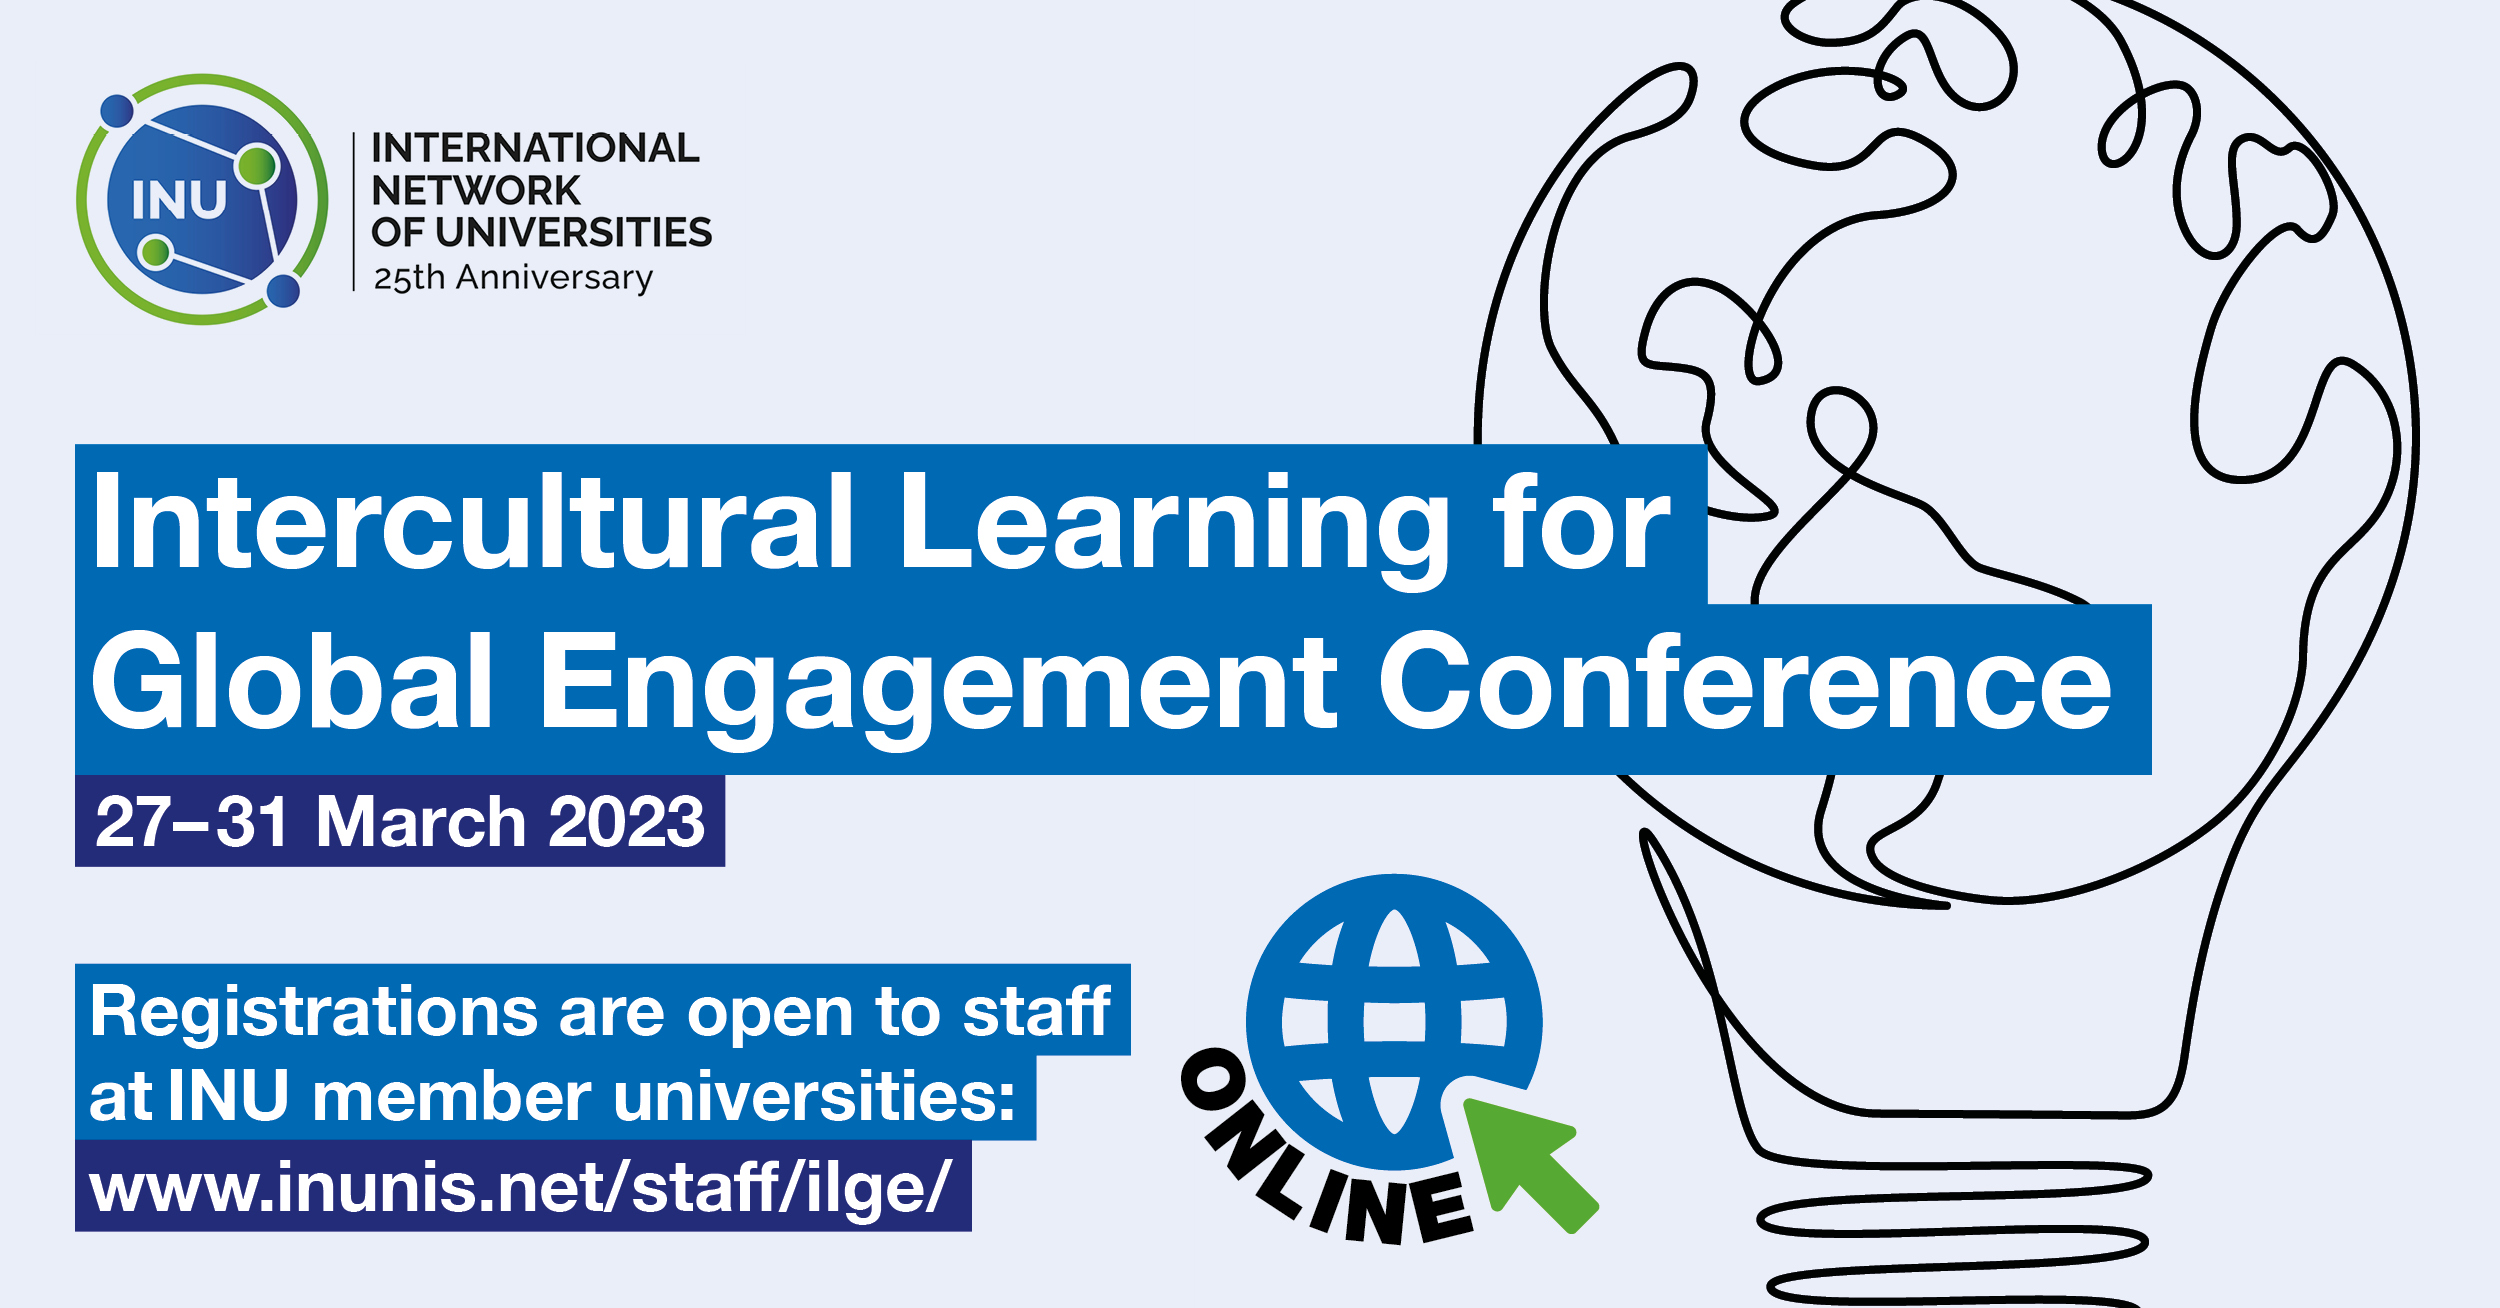 Intercultural Learning for Global Engagement Conference details